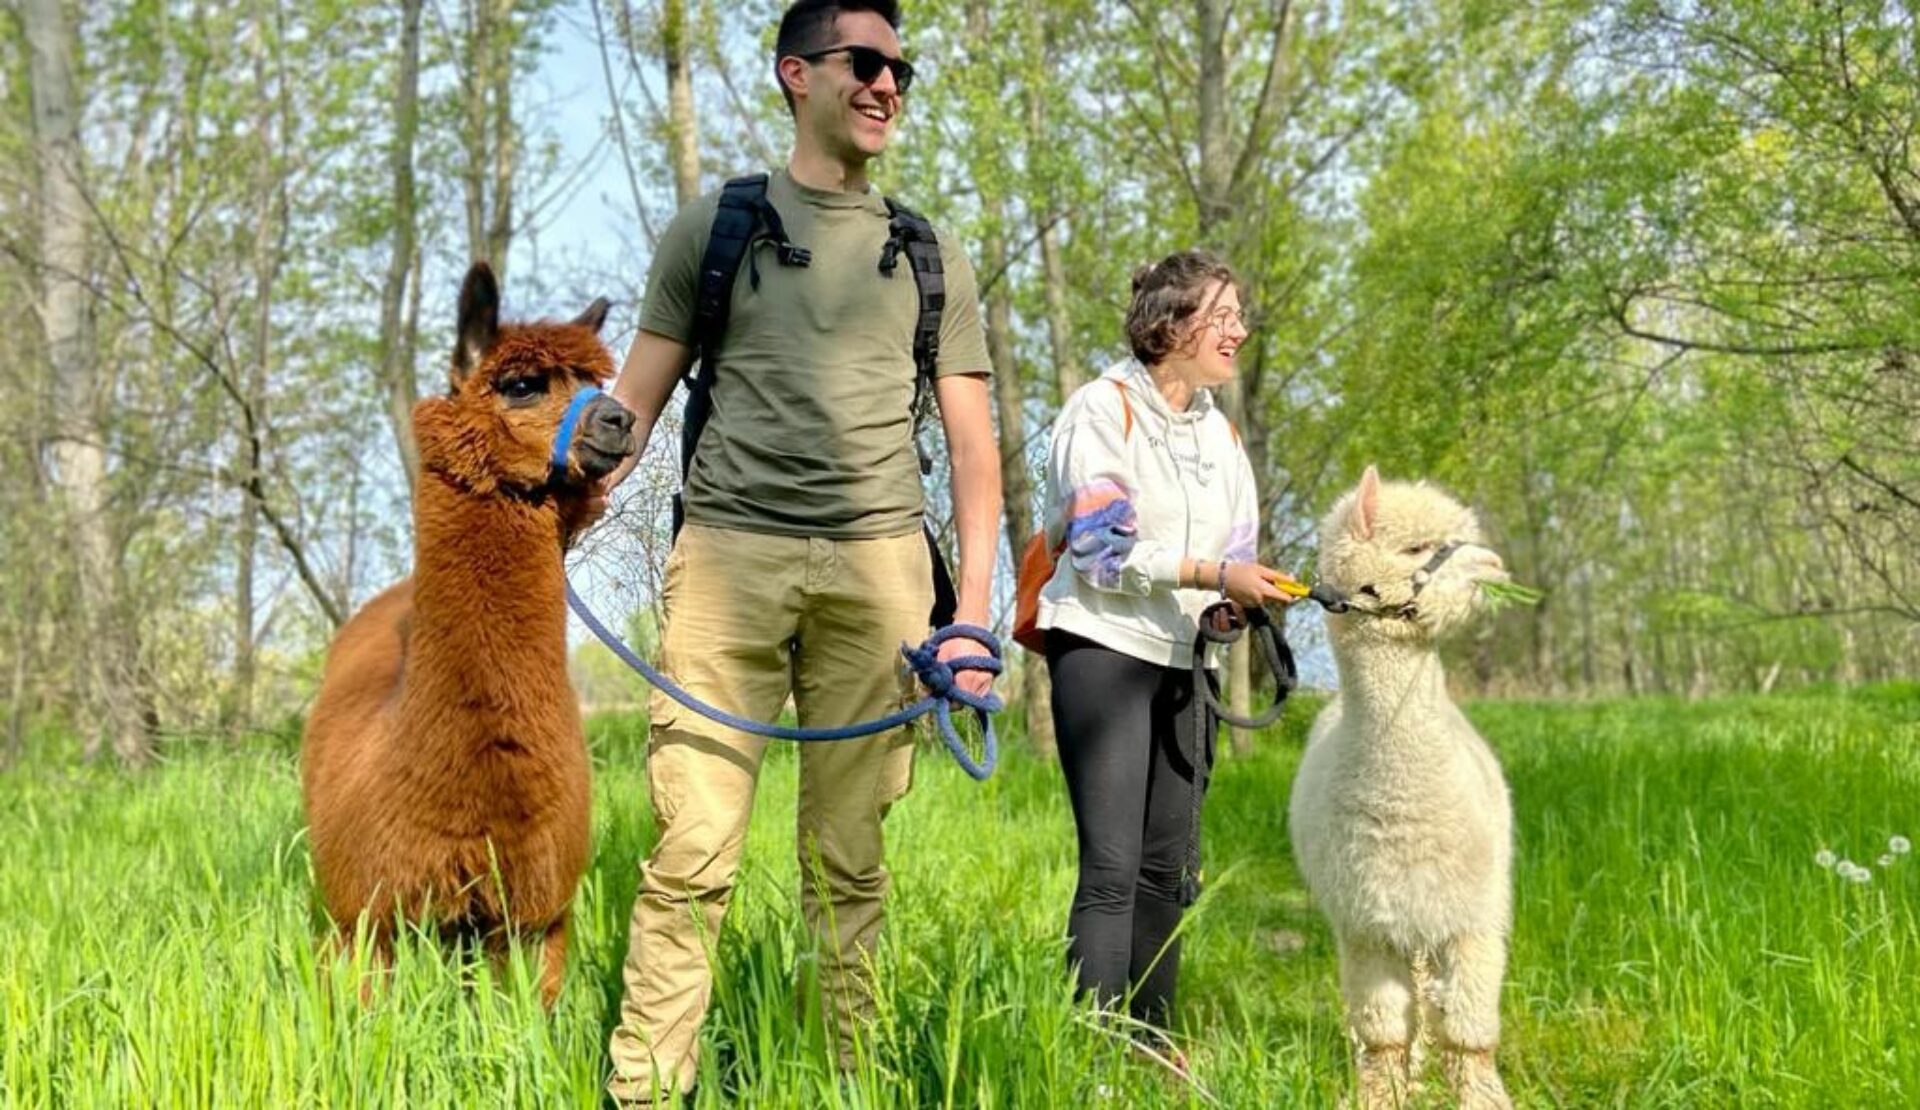 Walks with alpacas Romano di Lombardia